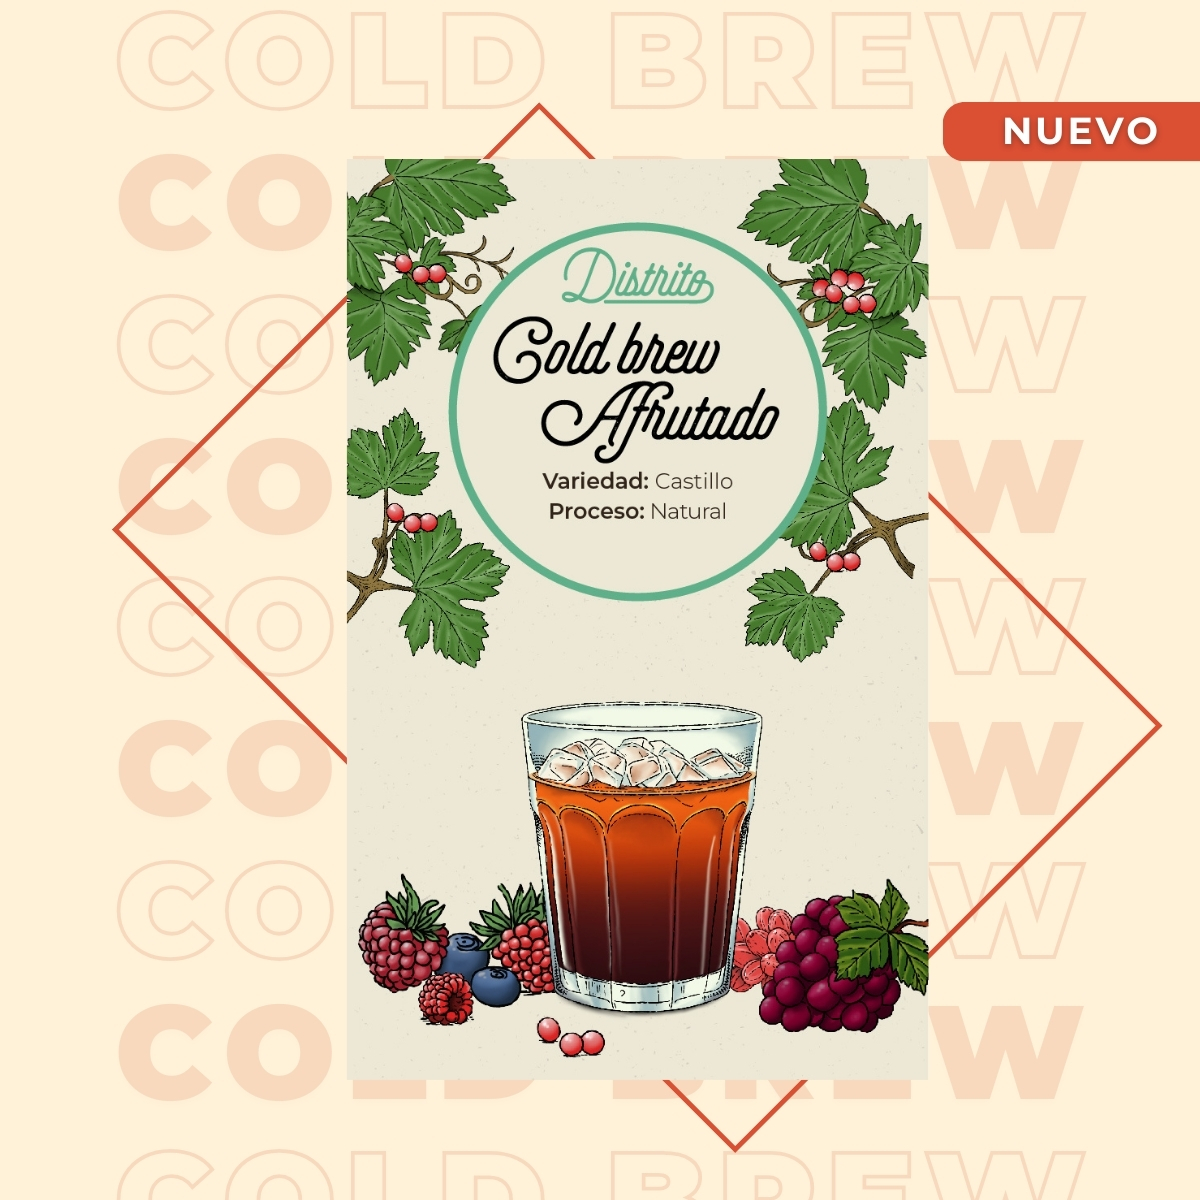 Cold brew afrutado 1 - Café Especial - Cold Brew Afrutado